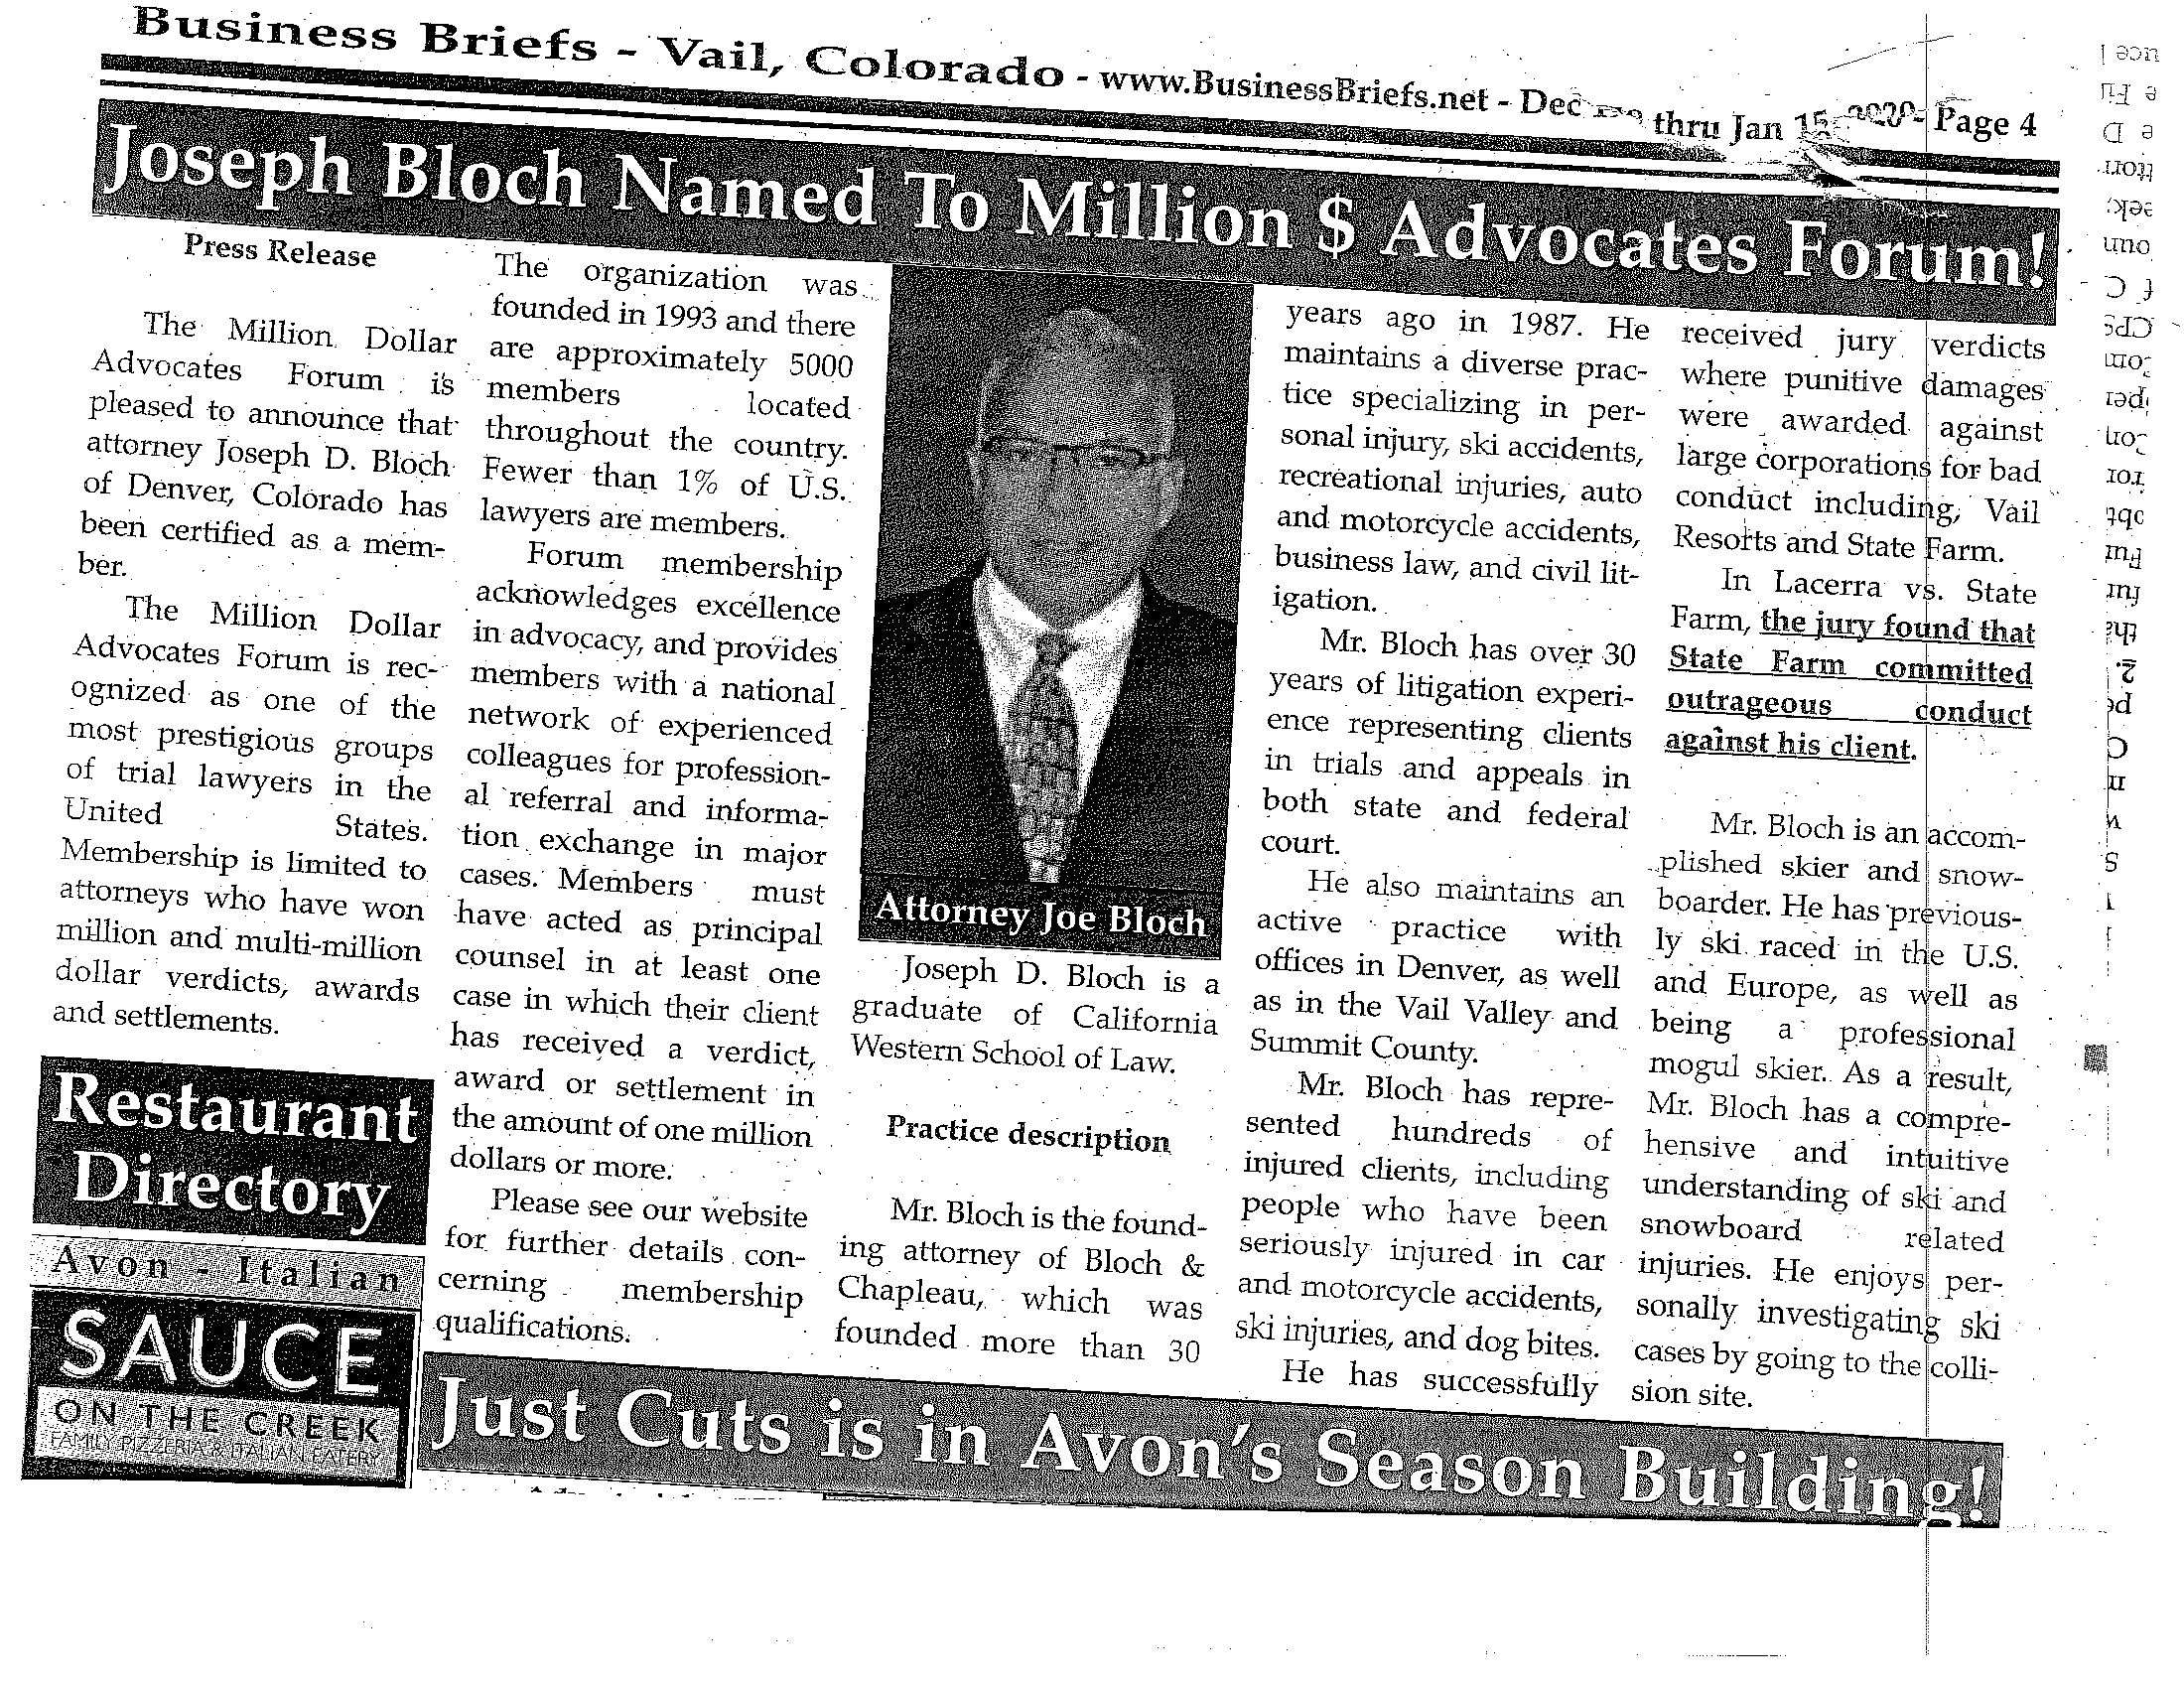 Joseph D. Bloch Named To Million Dollar Advocates Forum.